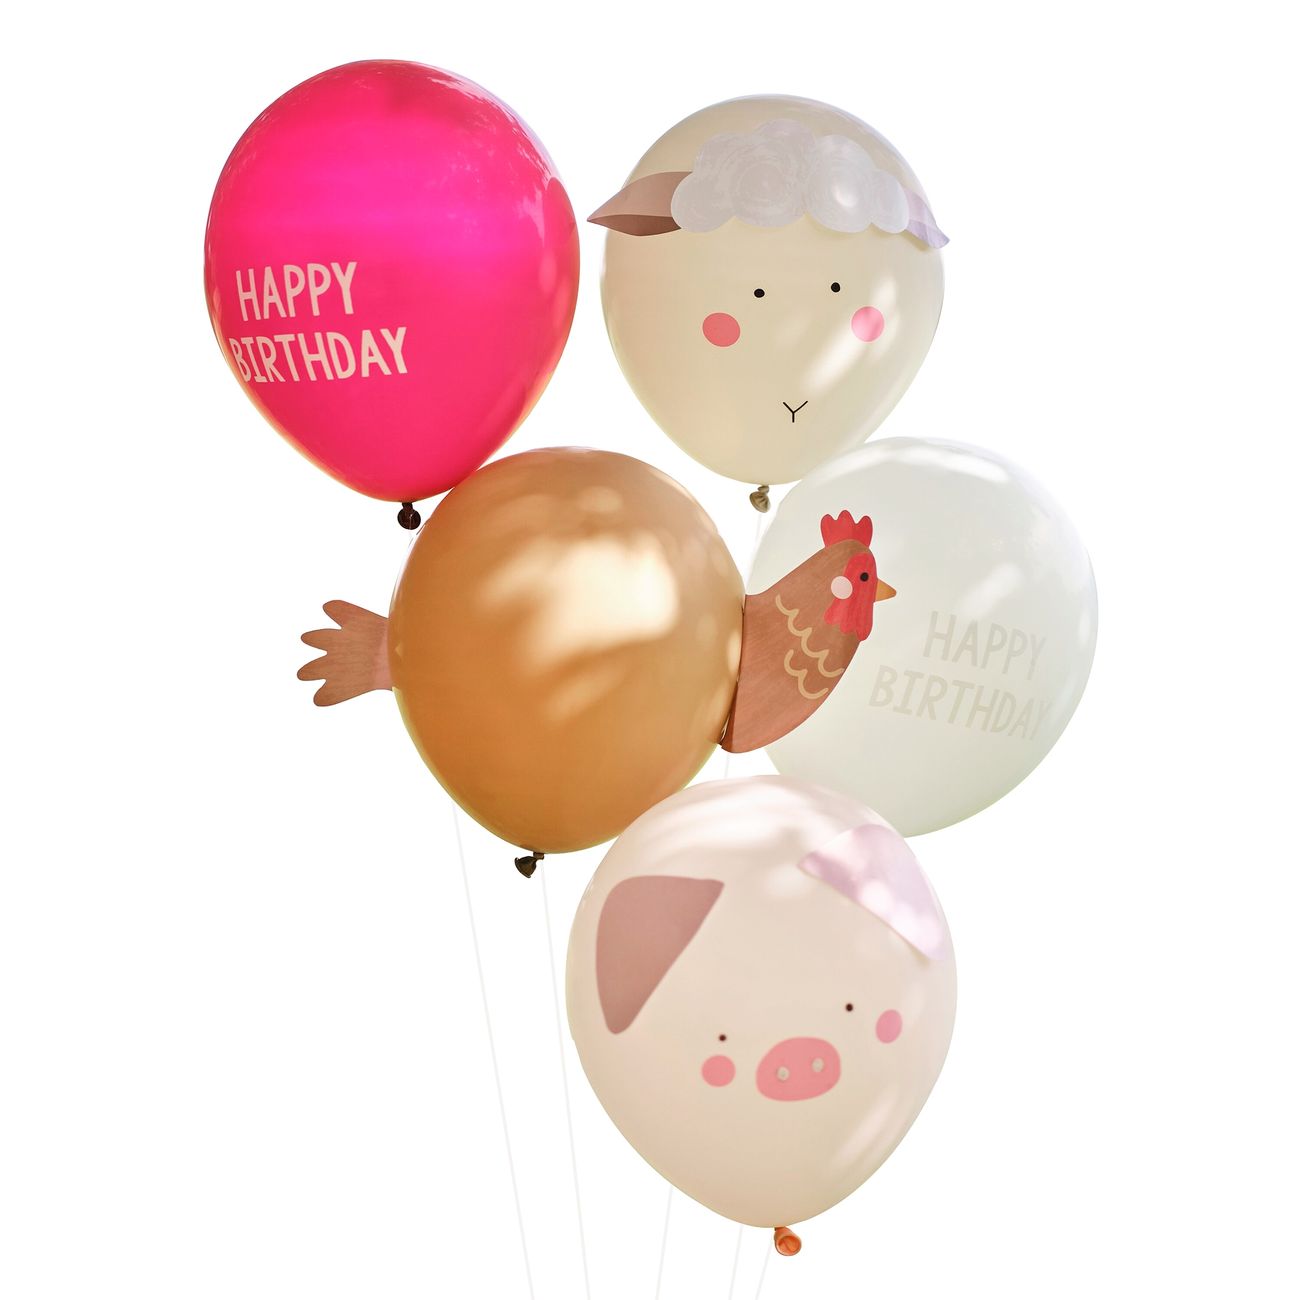 ballonger-happy-birthday-bondgard-100160-1